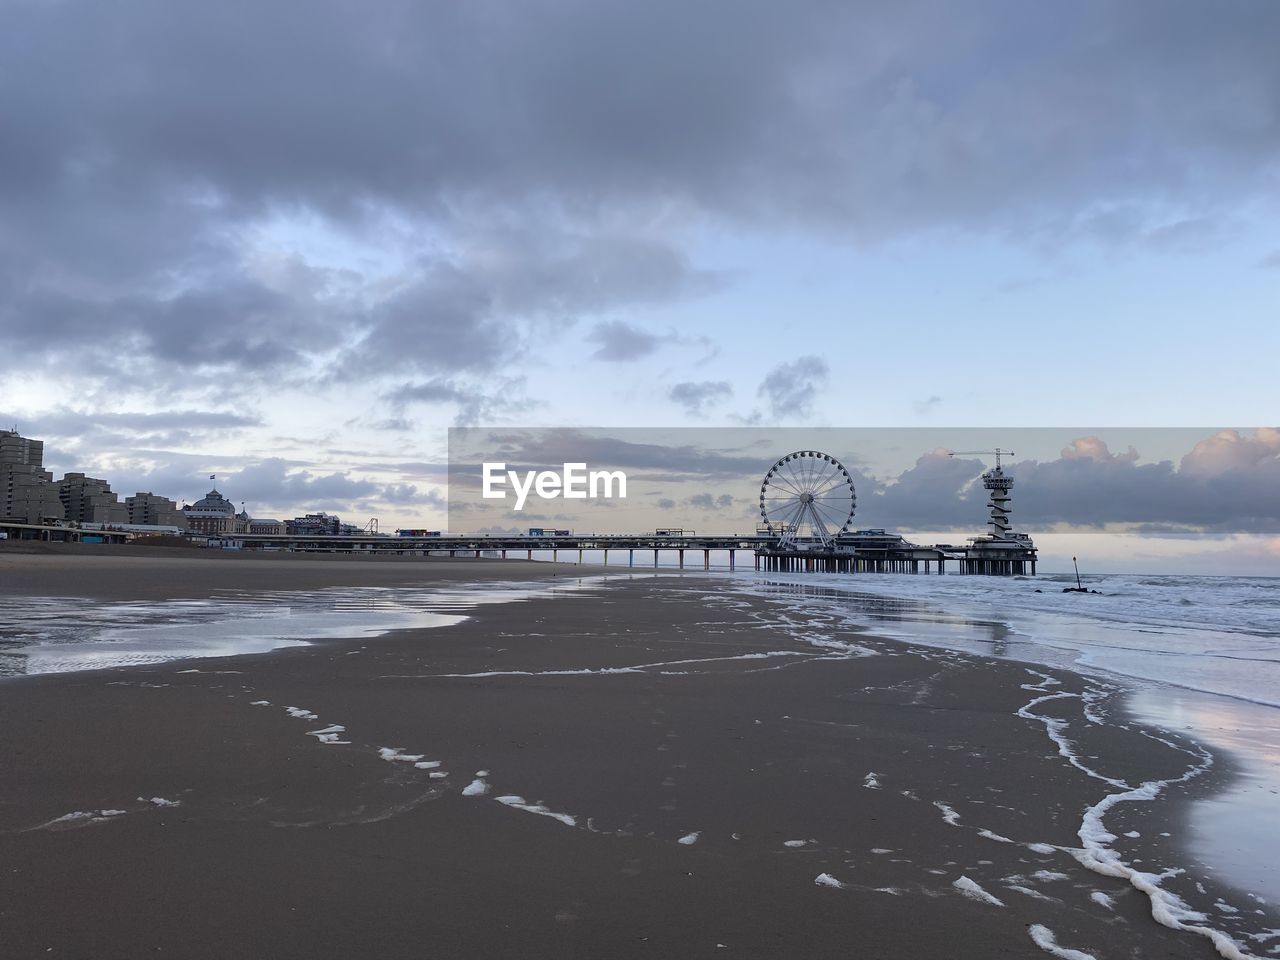 View of ferris wheel at beach against cloudy sky